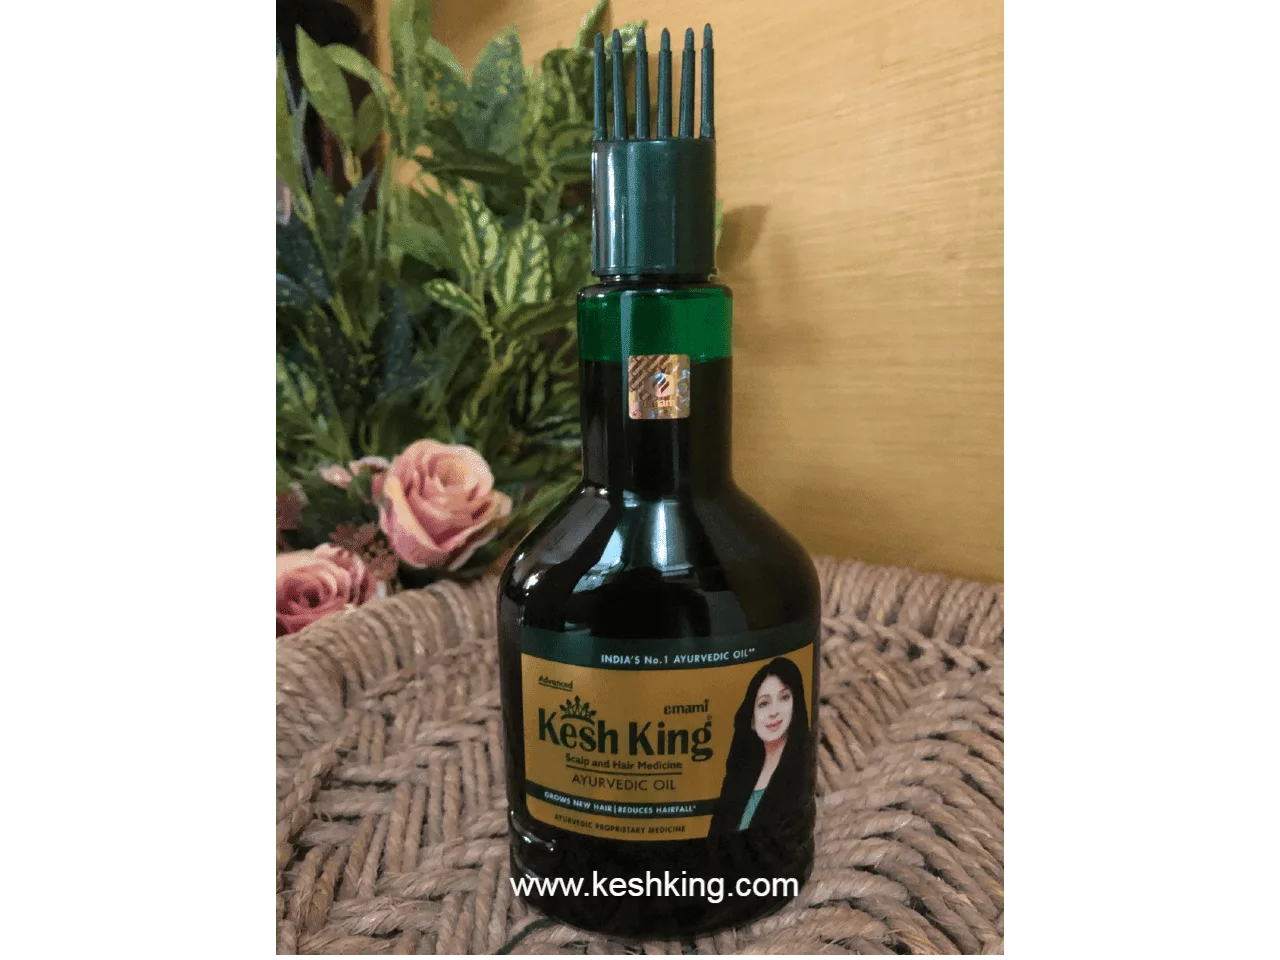 Kesh King Hair Oil Review